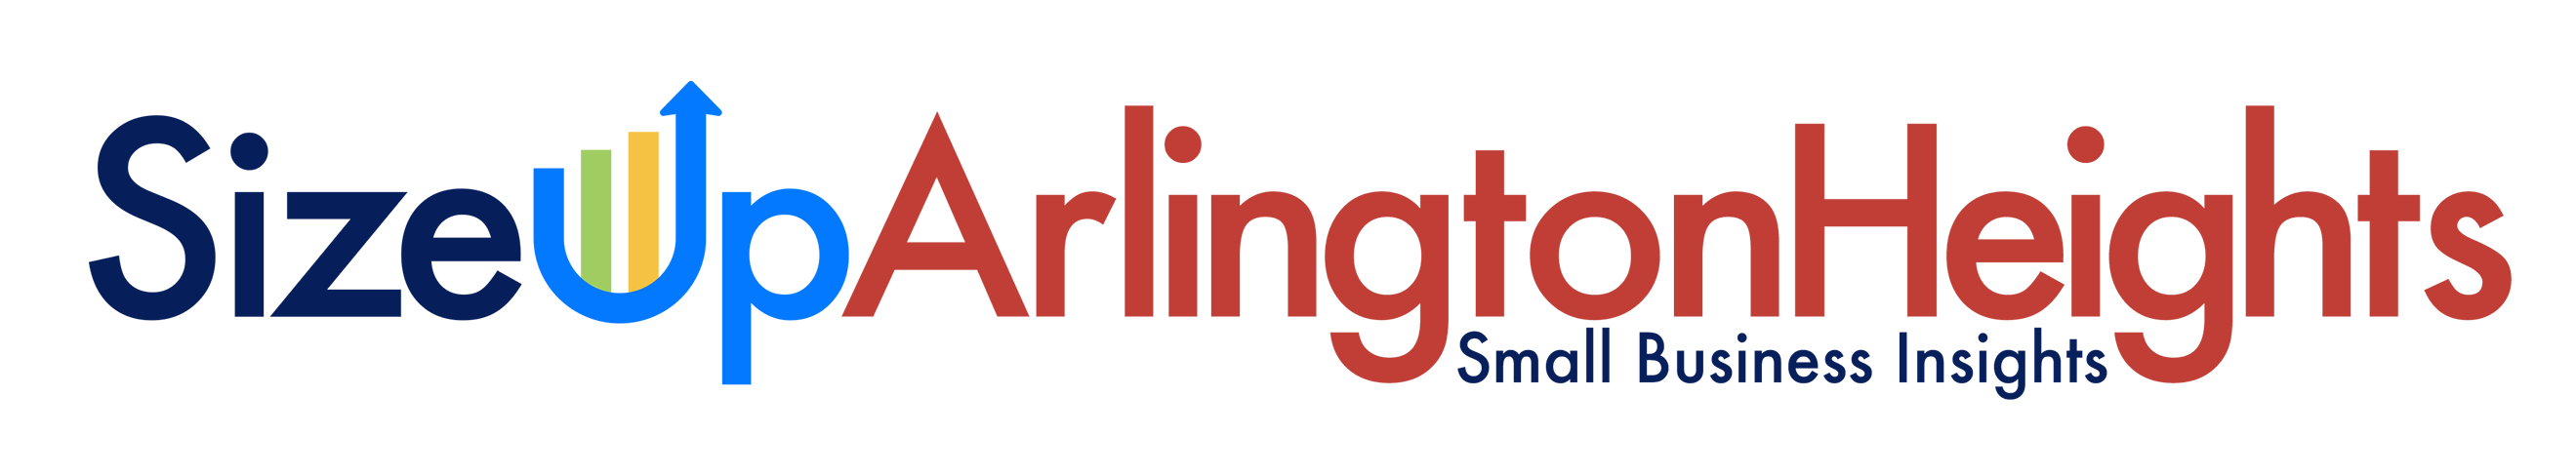 SizeUpArlingtonHeights Logo